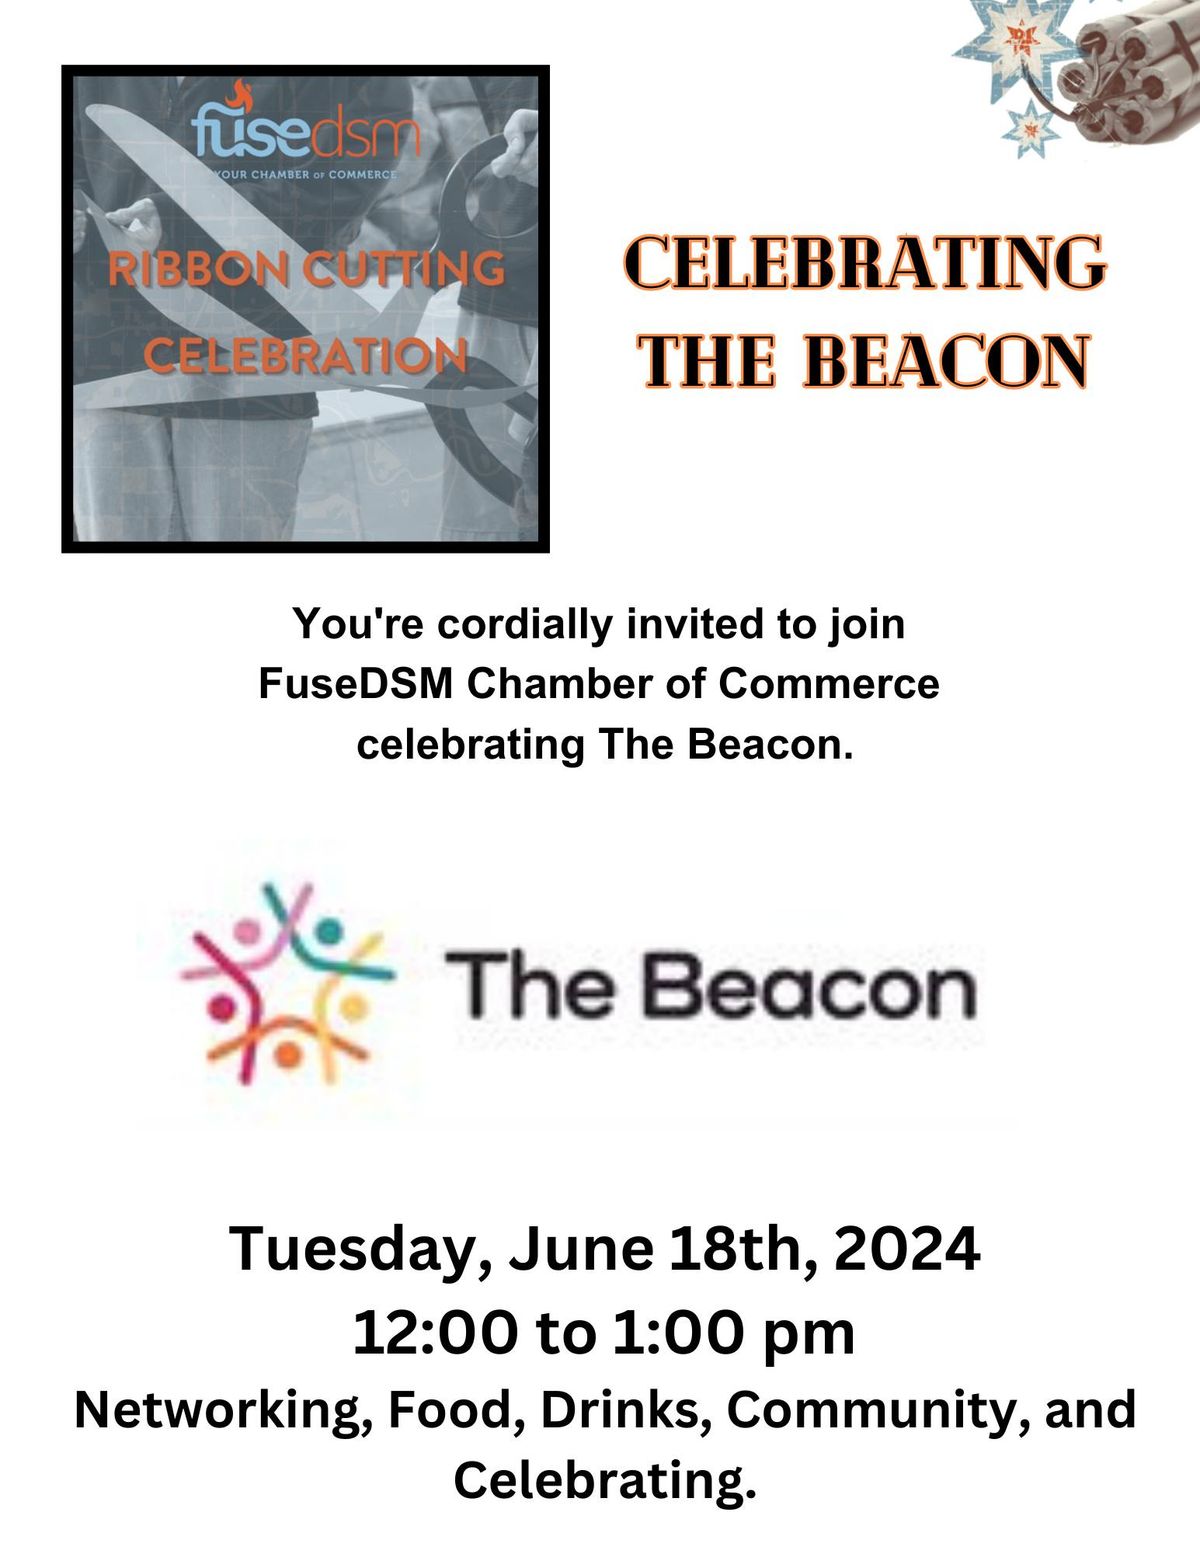 FuseDSM Ribbon Cutting Celebrating The Beacon